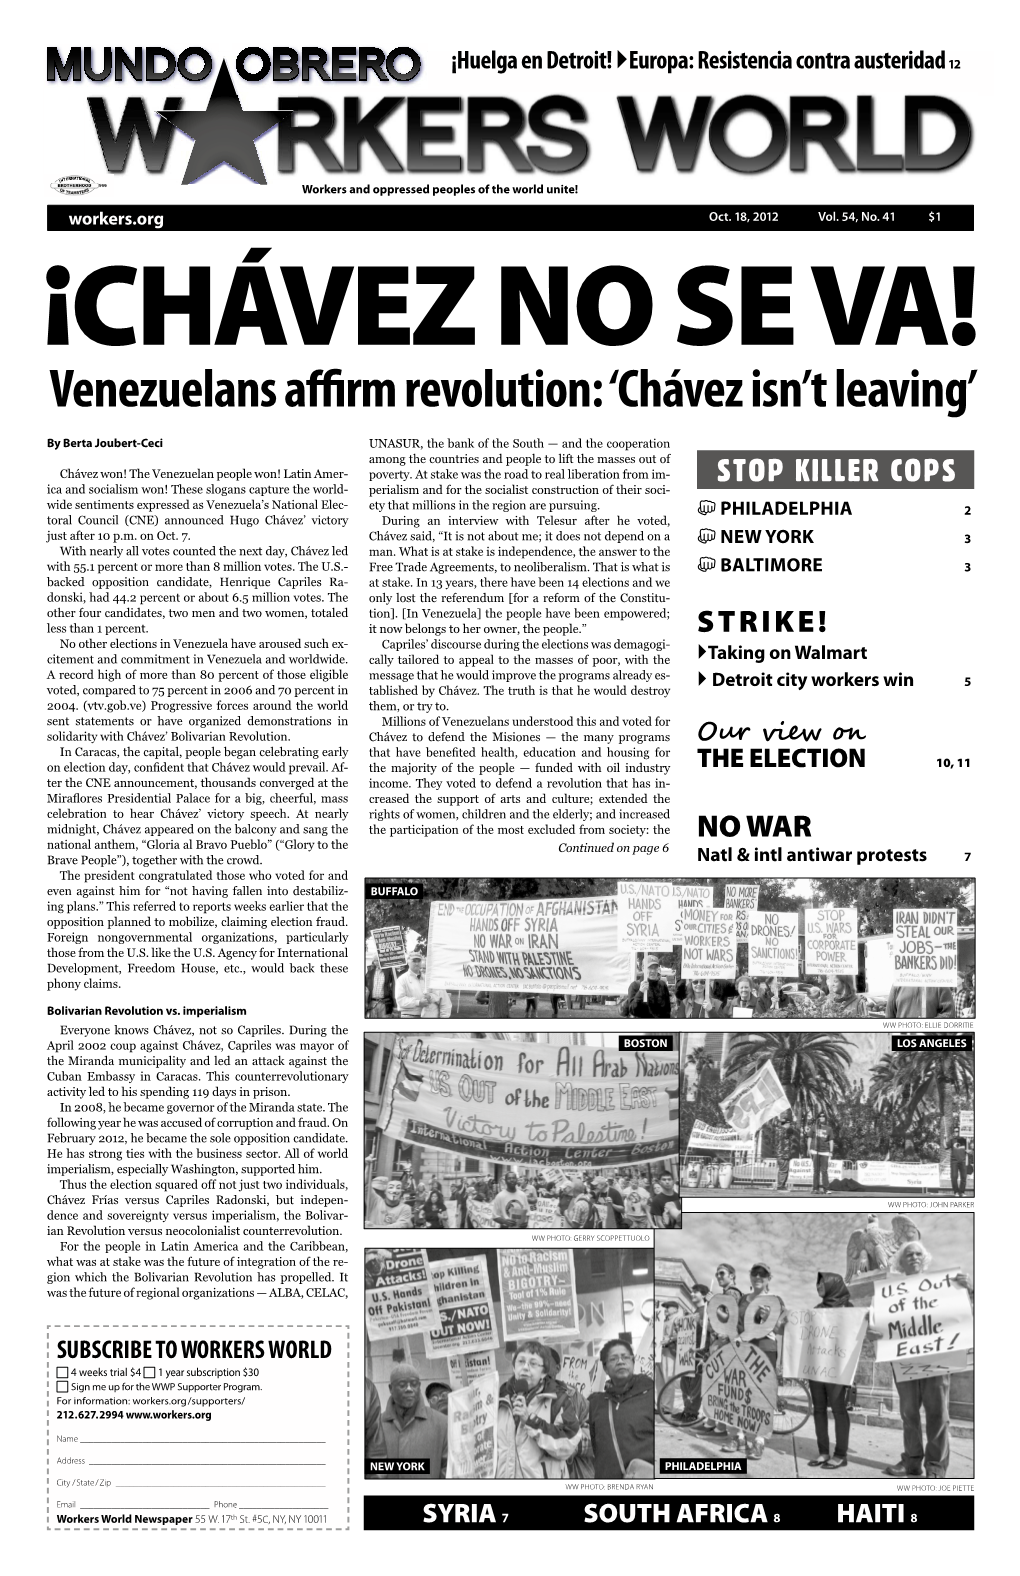 Venezuelans Affirm Revolution: 'Chávez Isn't Leaving'